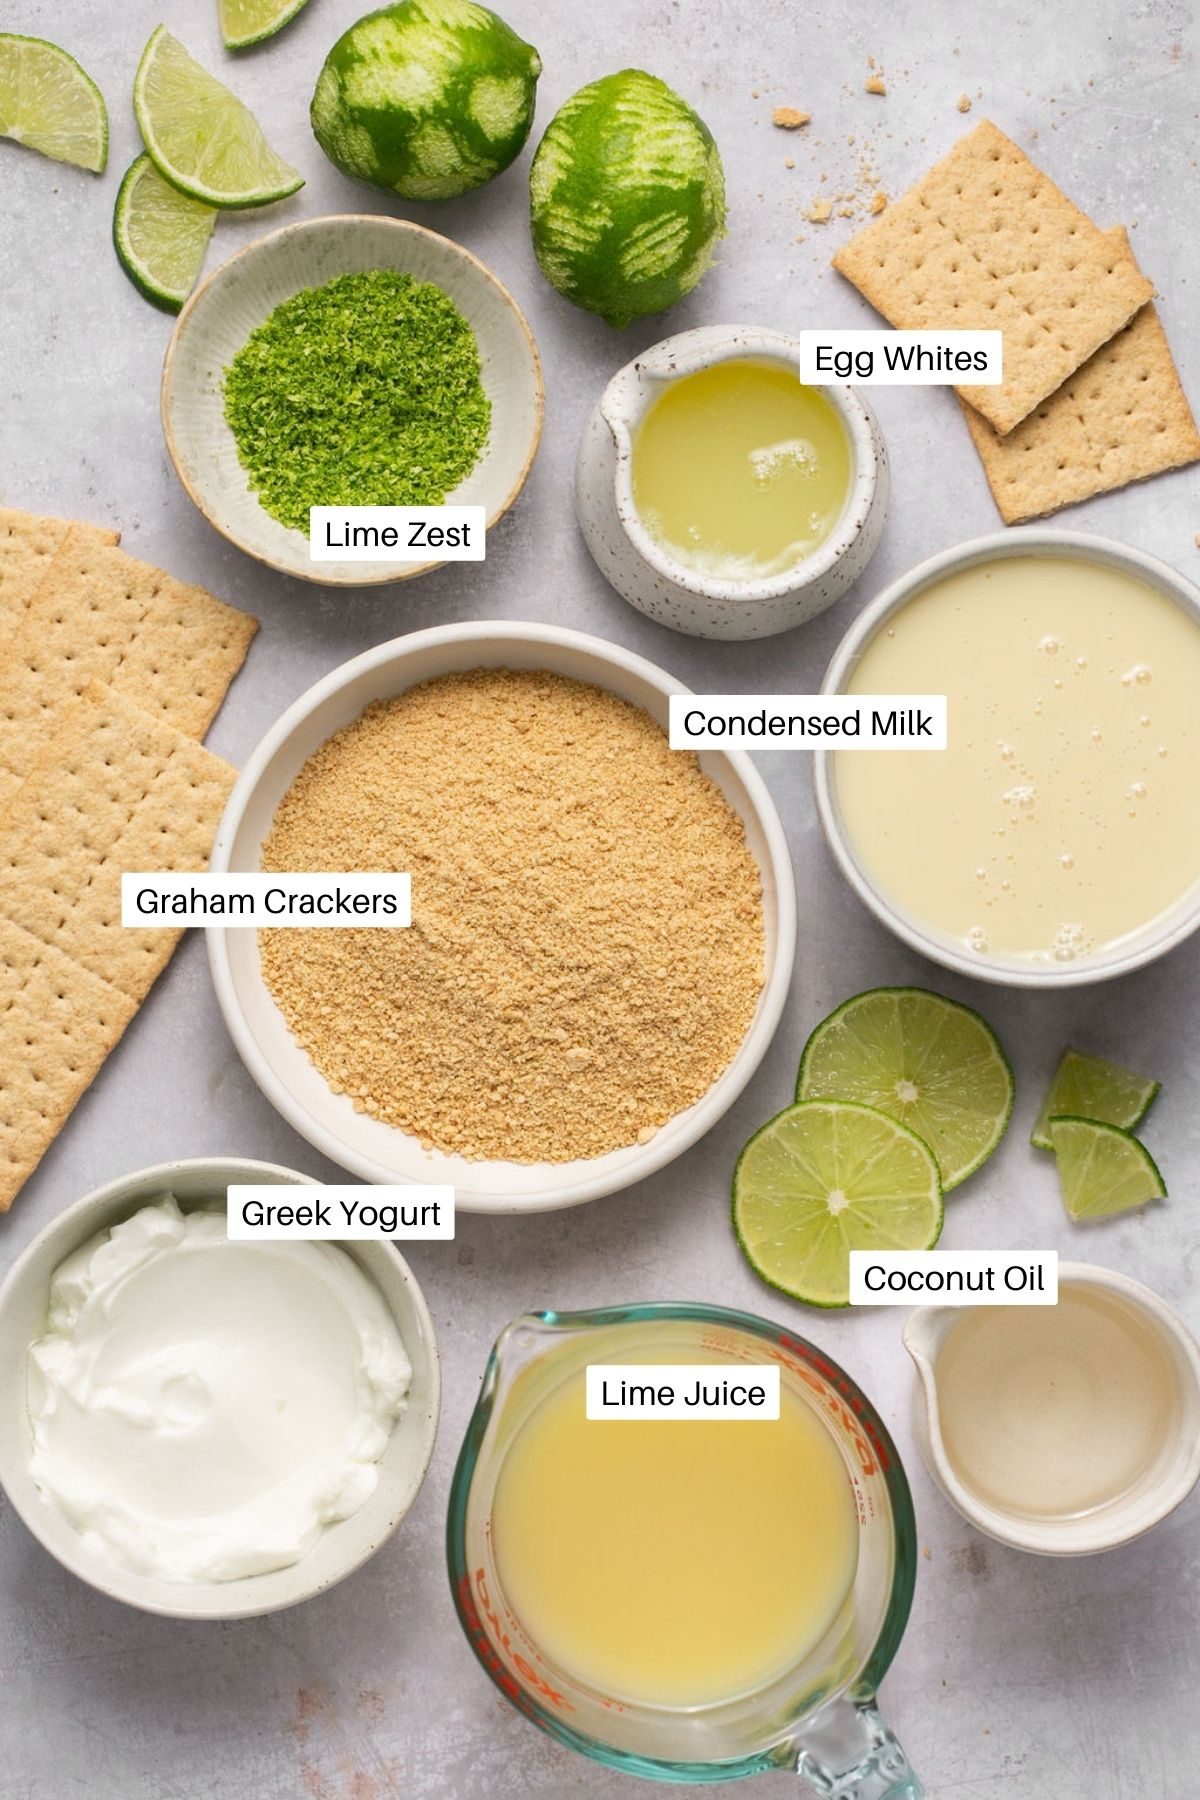 Ingredients for key lime pie bars including graham crackers, Greek yogurt, and condensed milk.